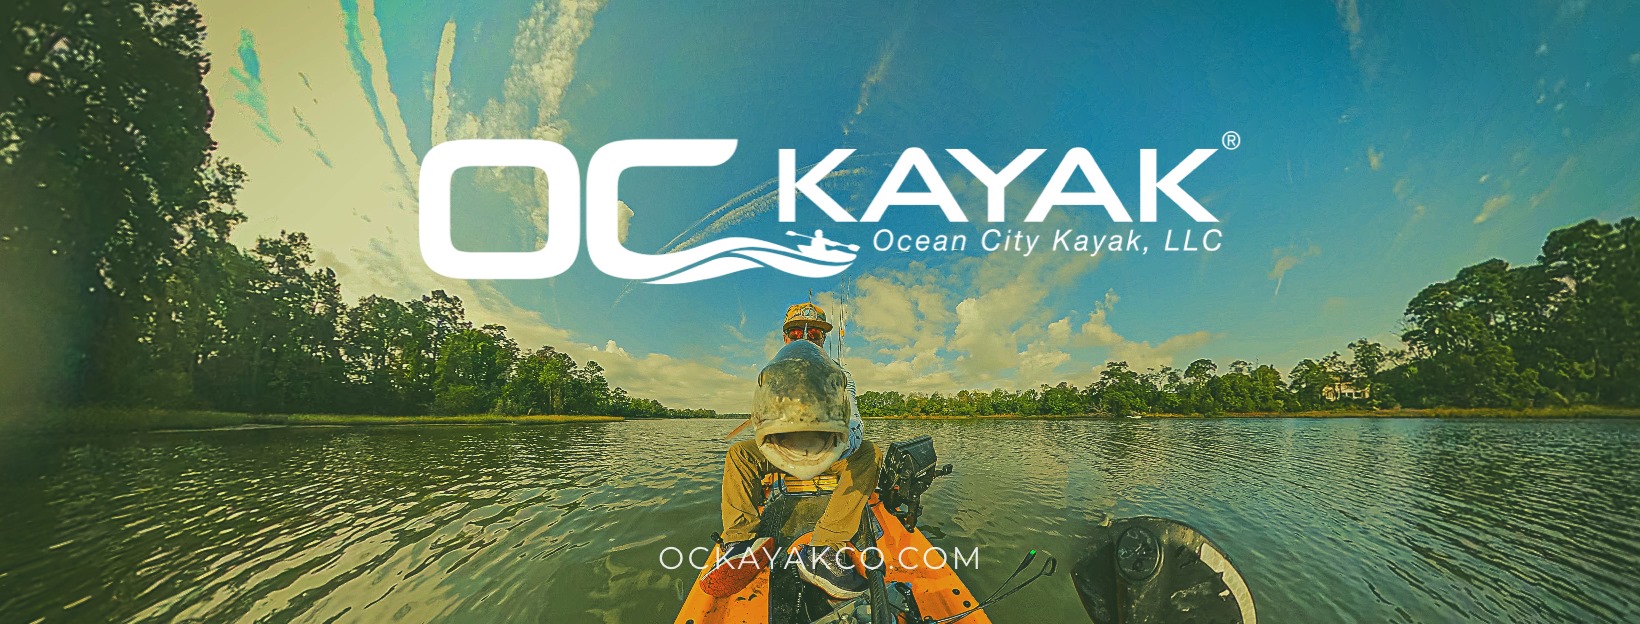 OC KAYAK  Ocean City Kayak, LLC